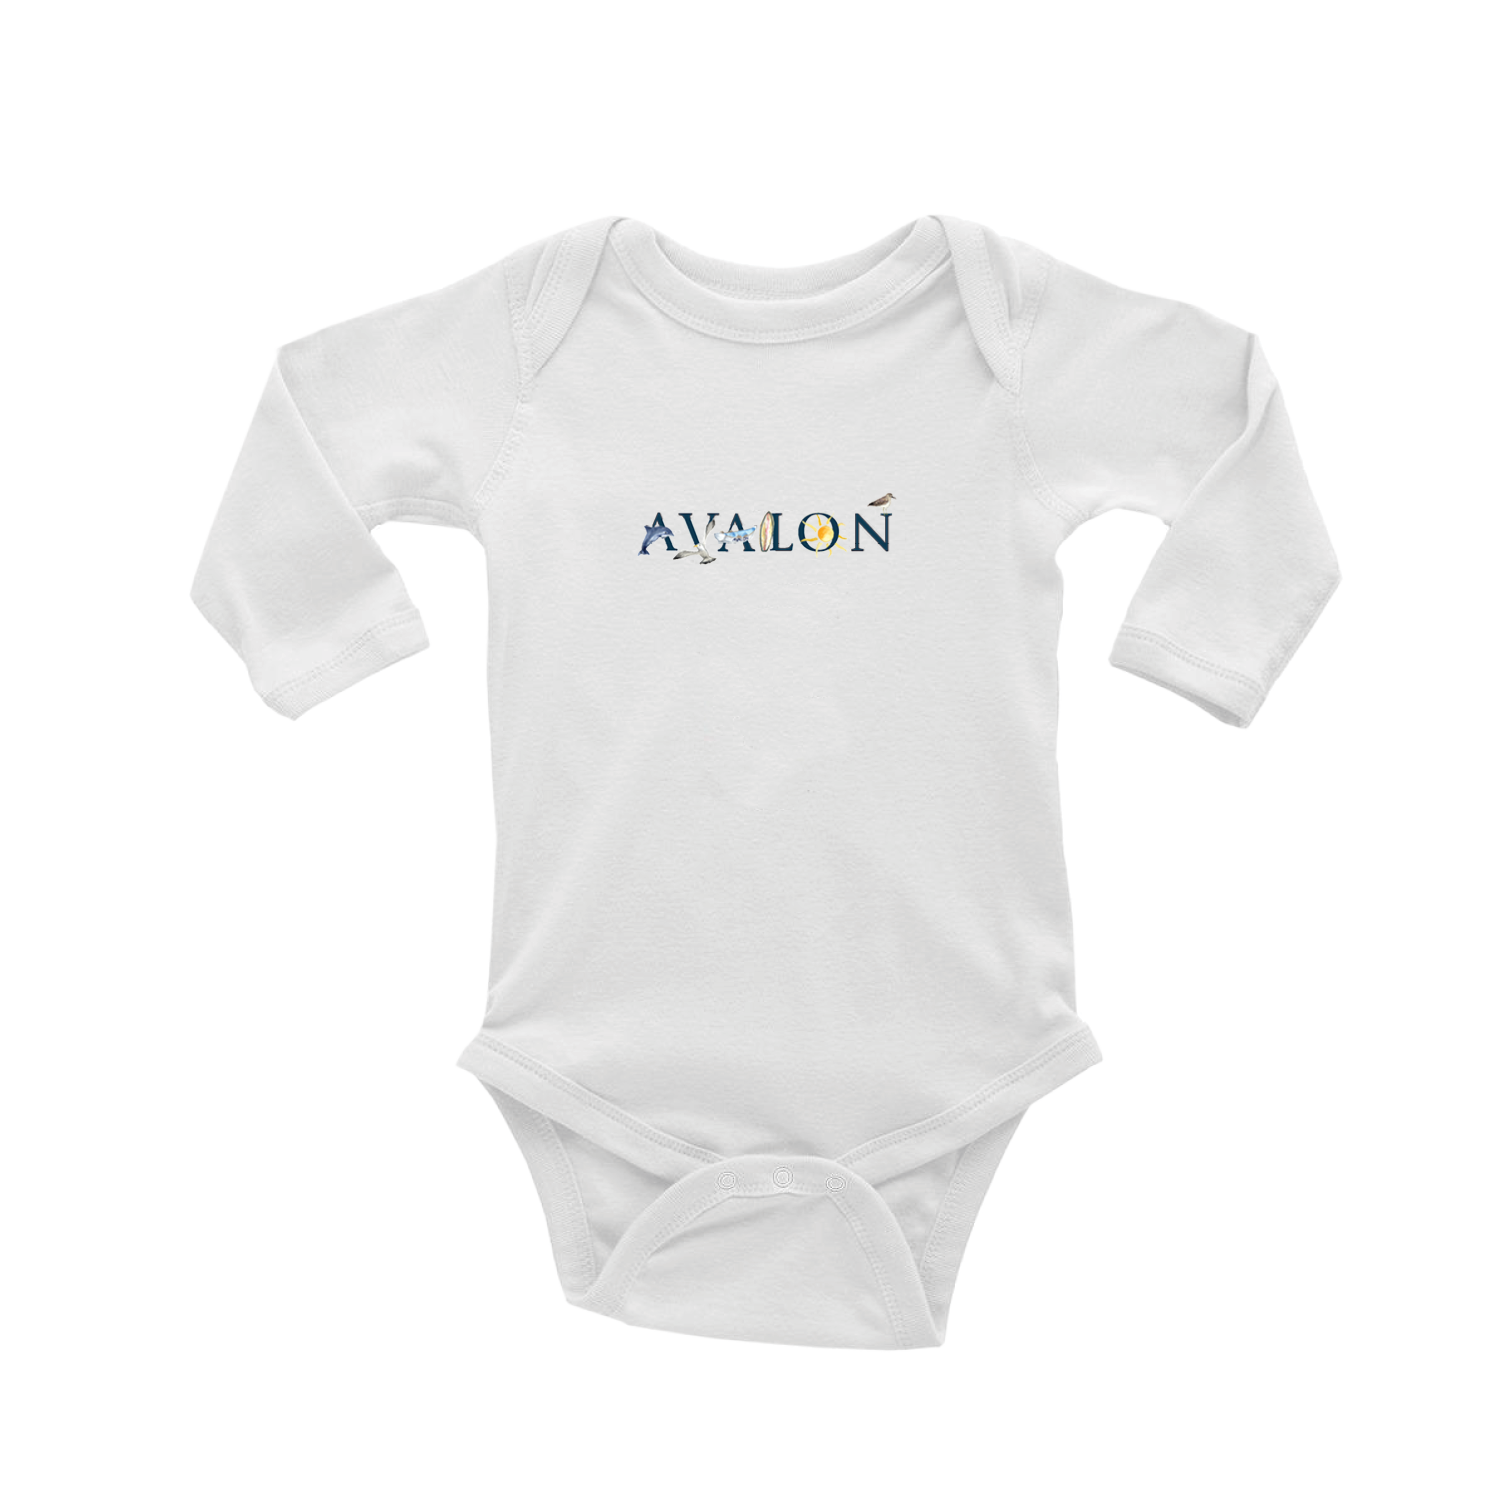 Avalon baby snap up long sleeve